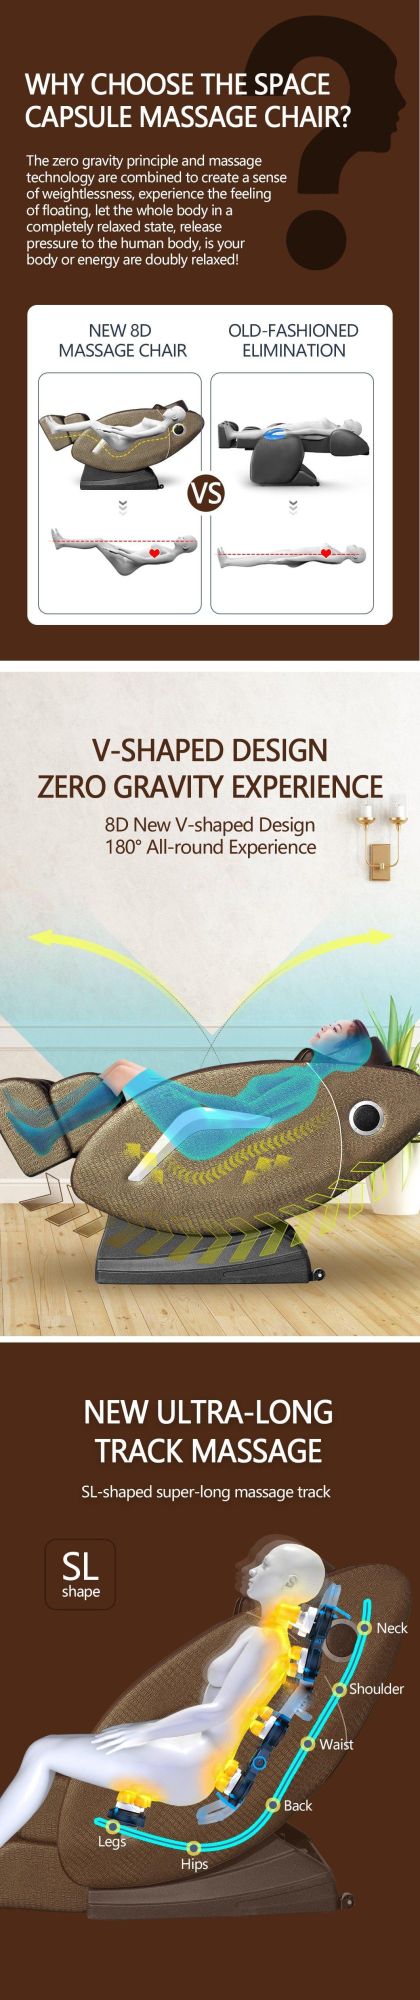 L Shape Track Music 3D Full Body Shiatsu Game Massage Chair